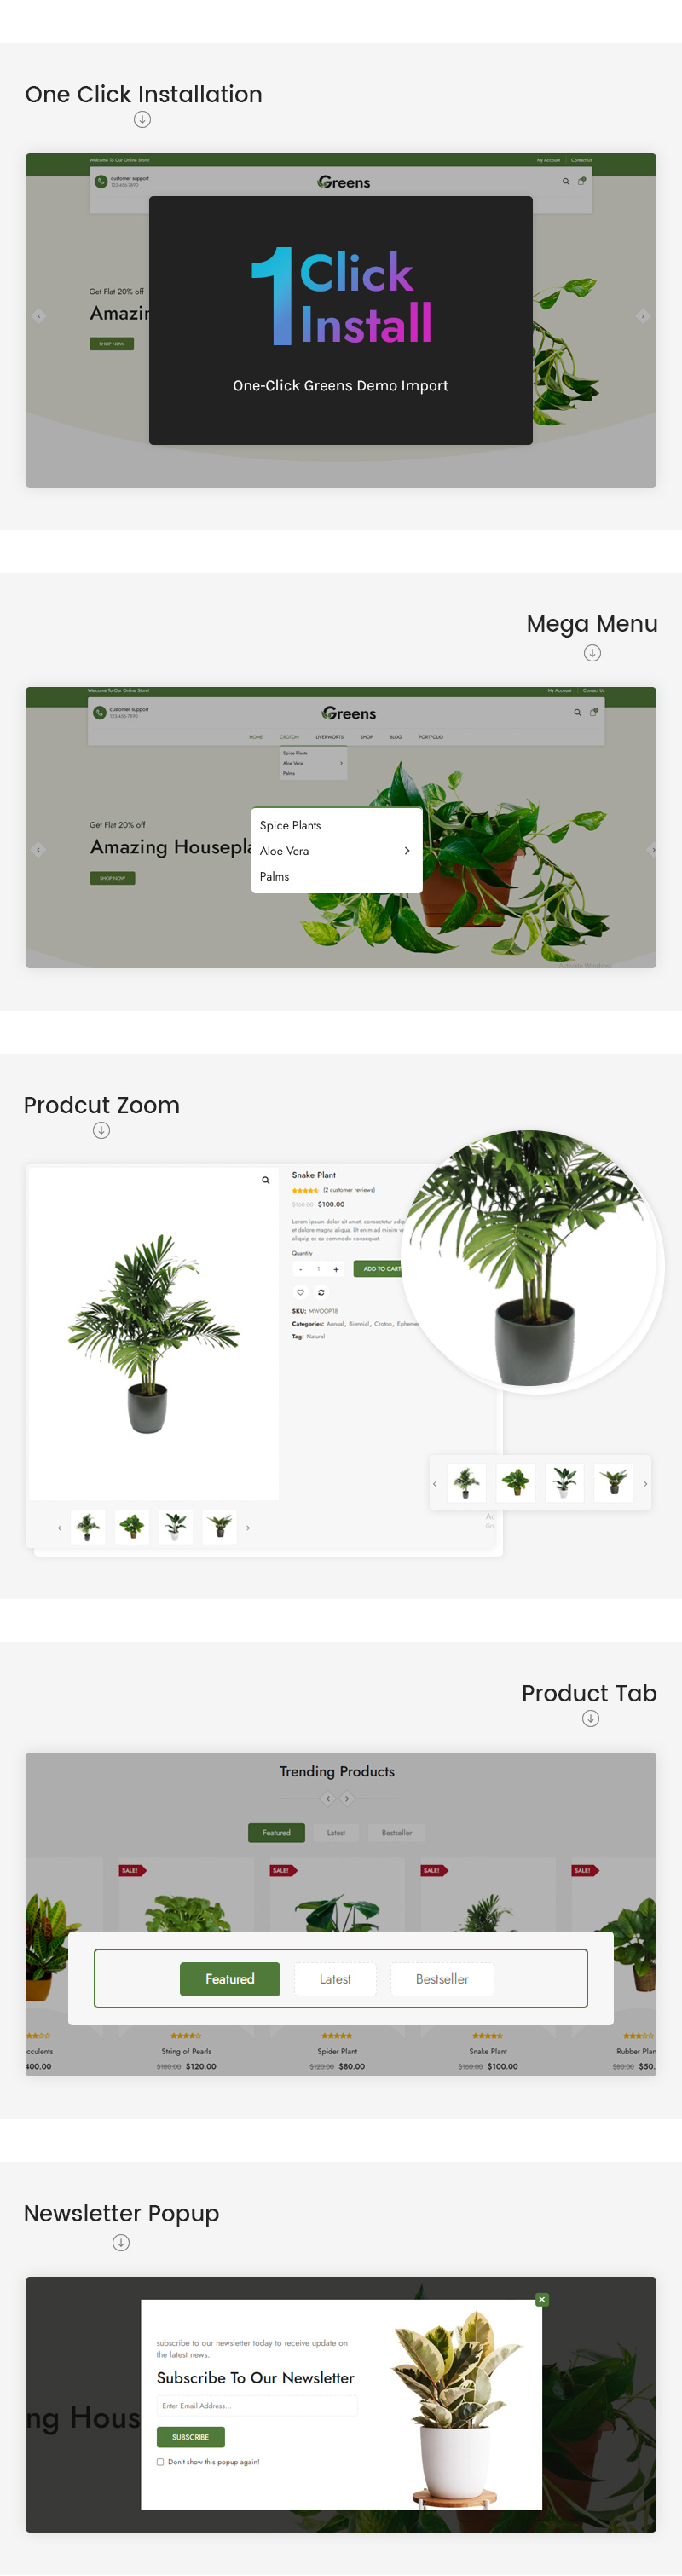 greens-features-3.jpg